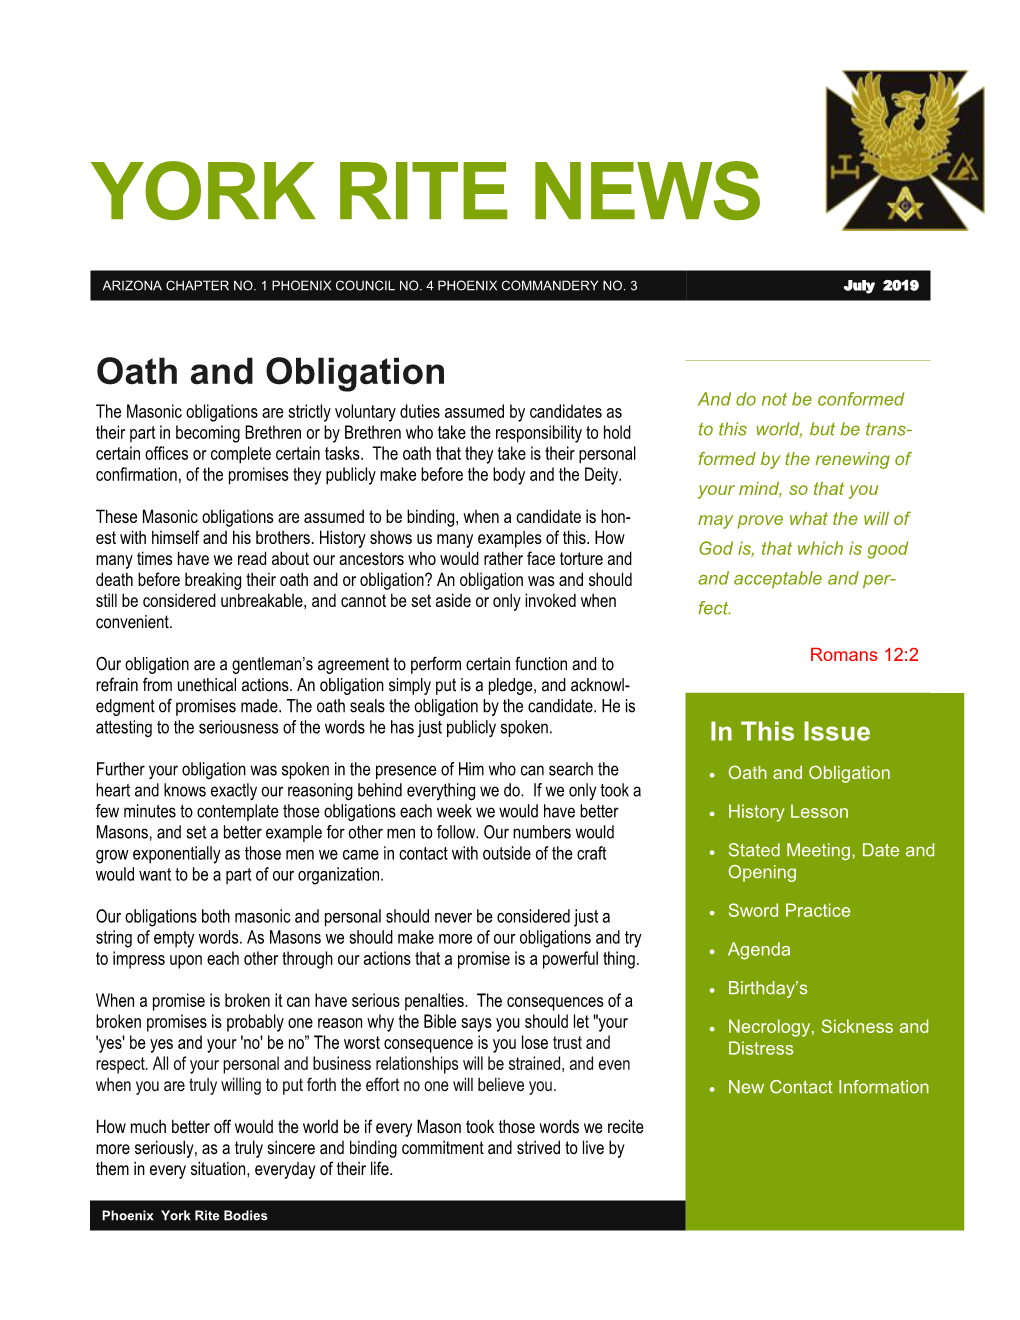 York Rite News